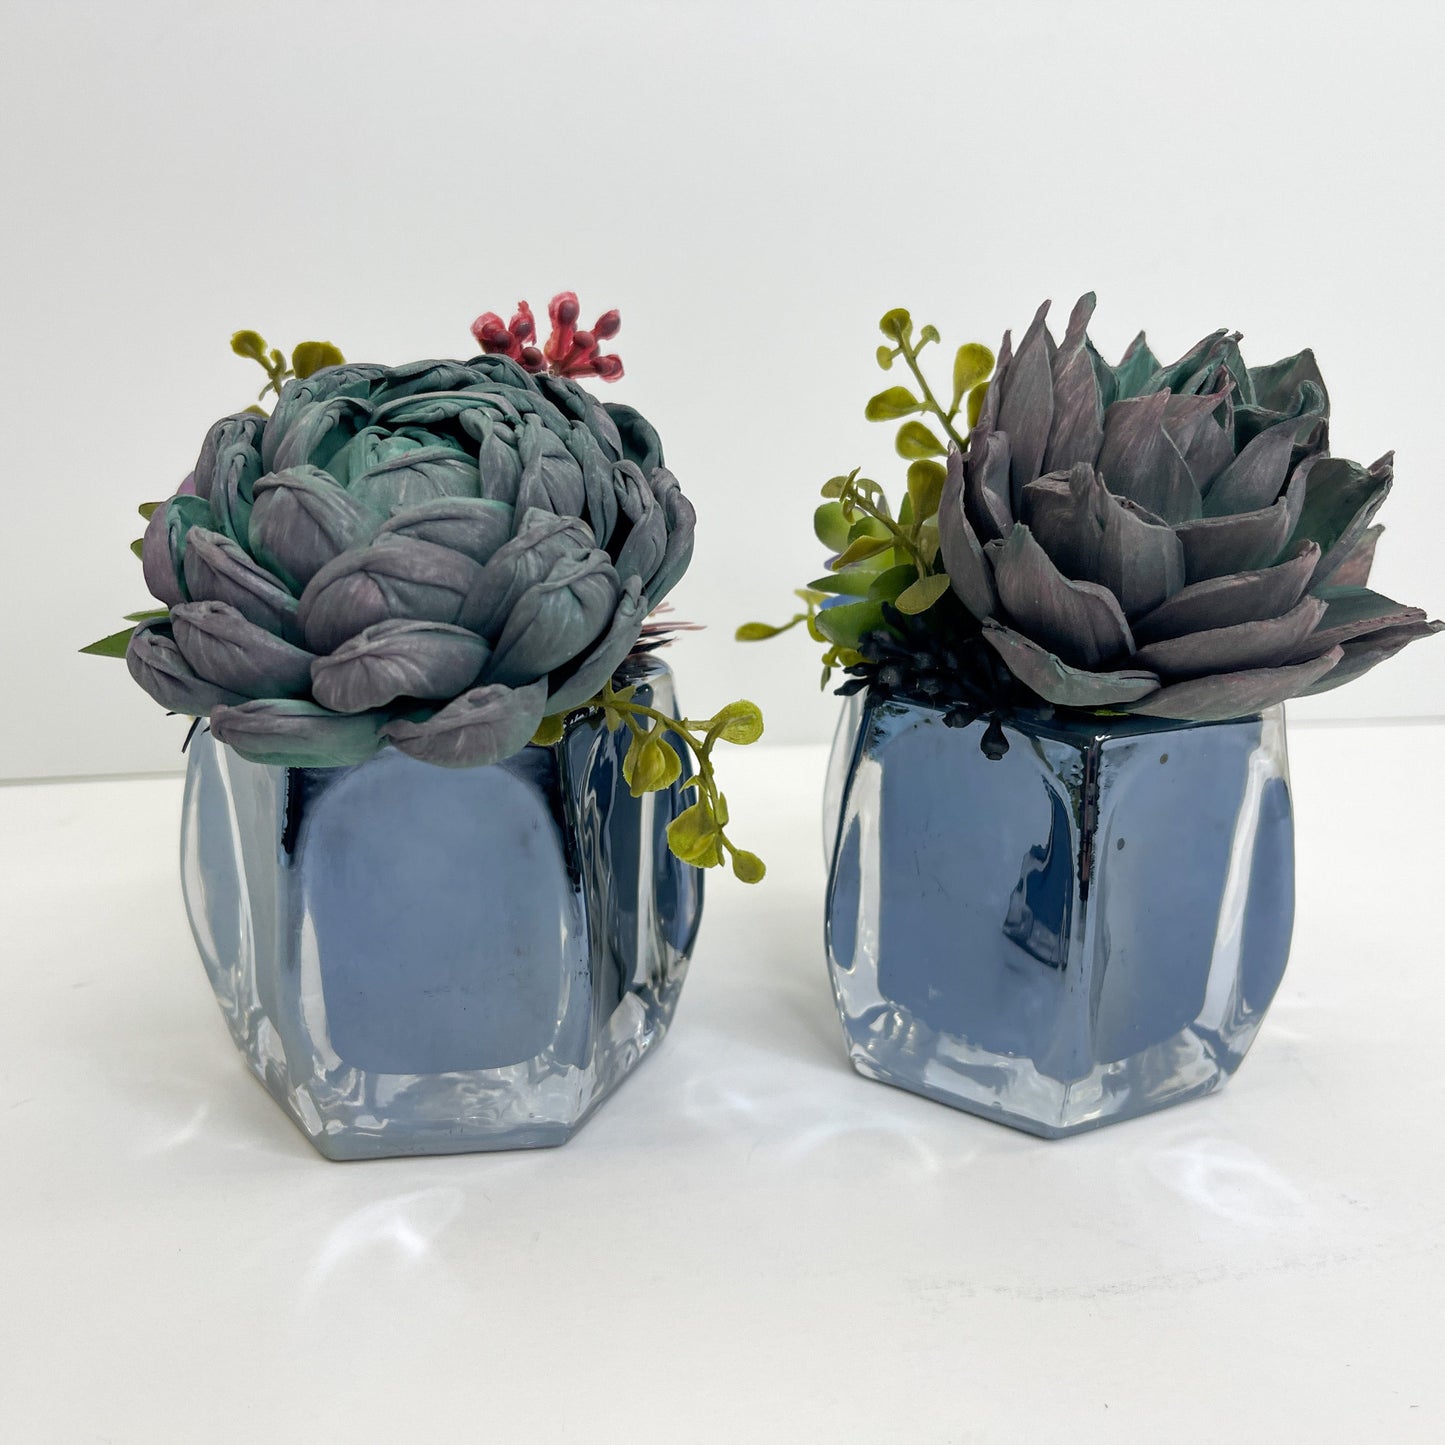 Mini Succulent Garden Set - Mirror Black Glass